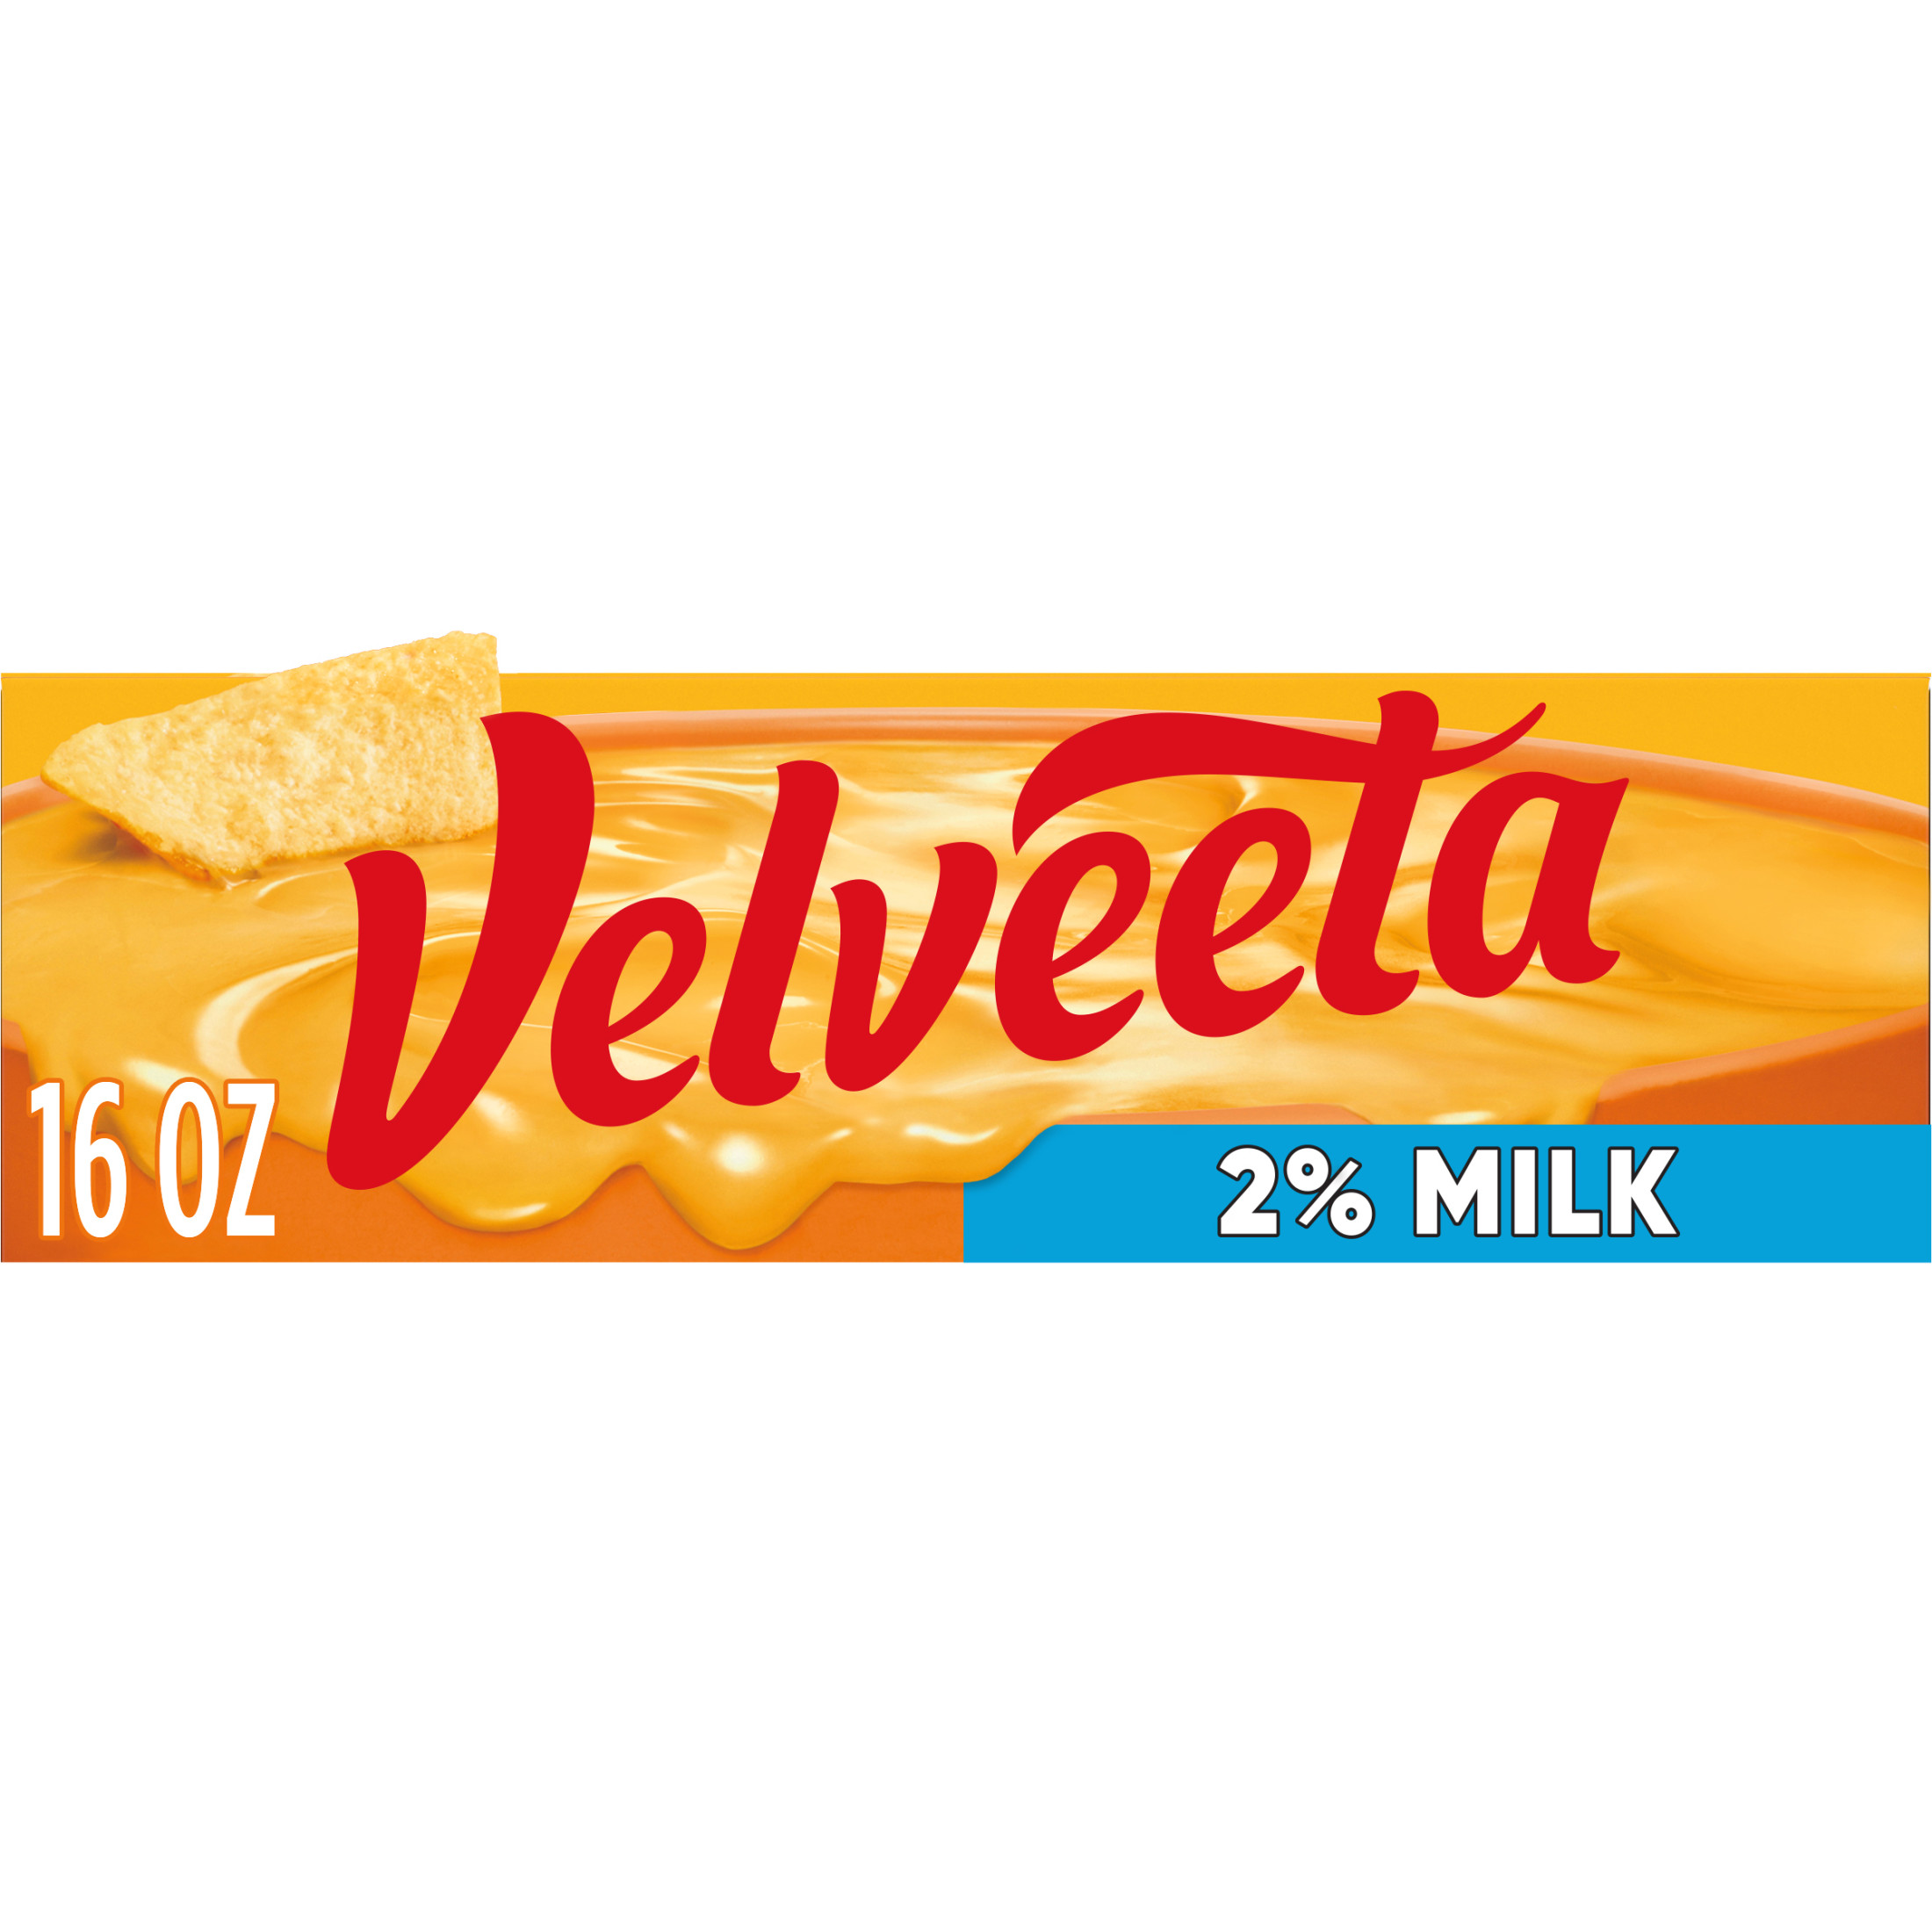 Velveeta 2% Milk Reduced Fat Melting Cheese Dip & Sauce with 25% Less Fat, 16 oz Block - image 1 of 14